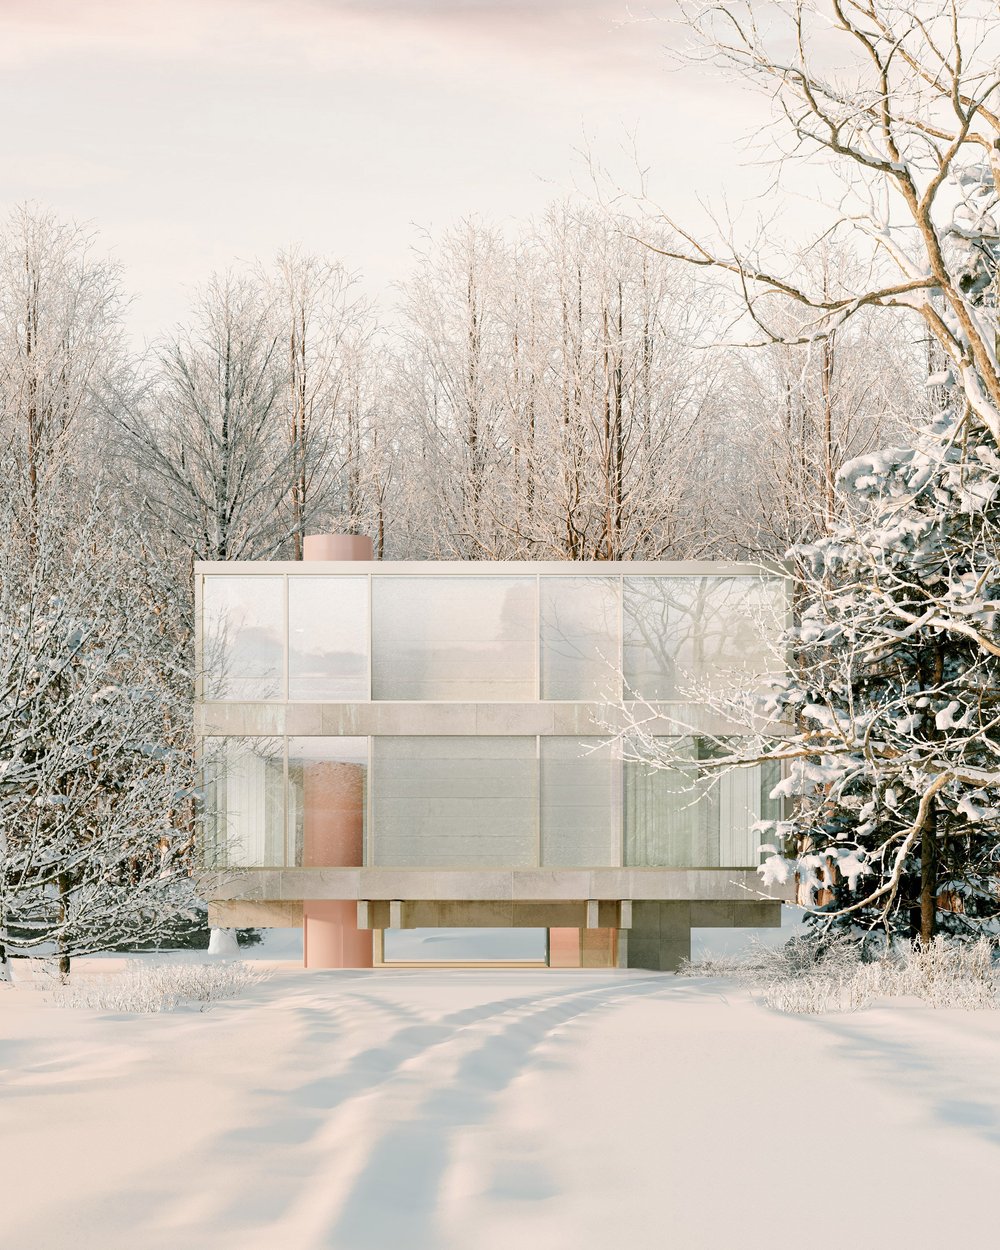 andres-reisigner-winter-house-metaverse-architecture_dezeen_2364_col_2.jpeg